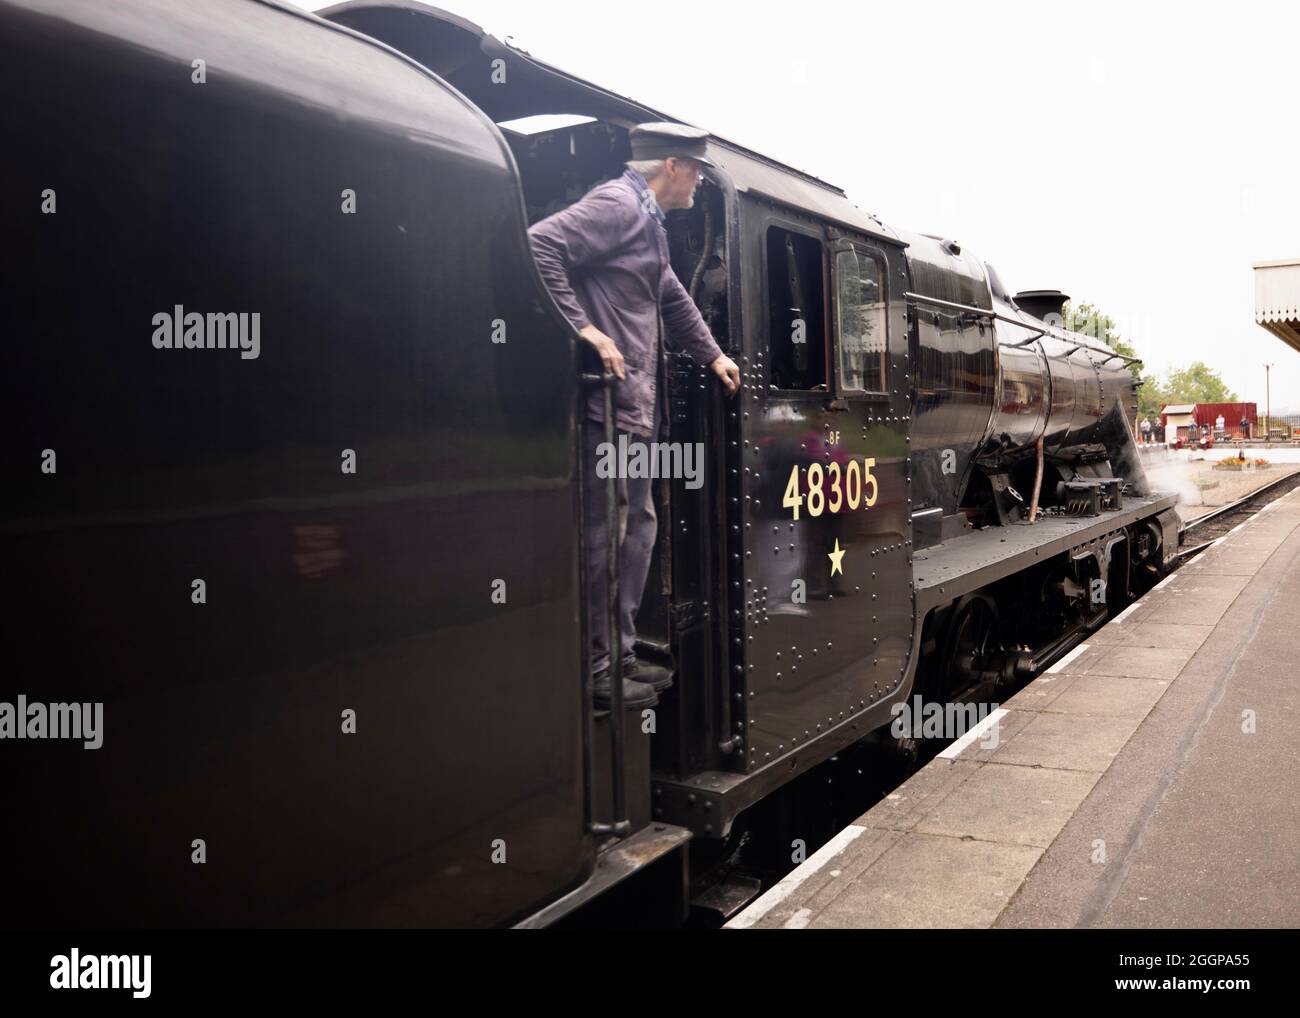 Steam Train Stock Photo